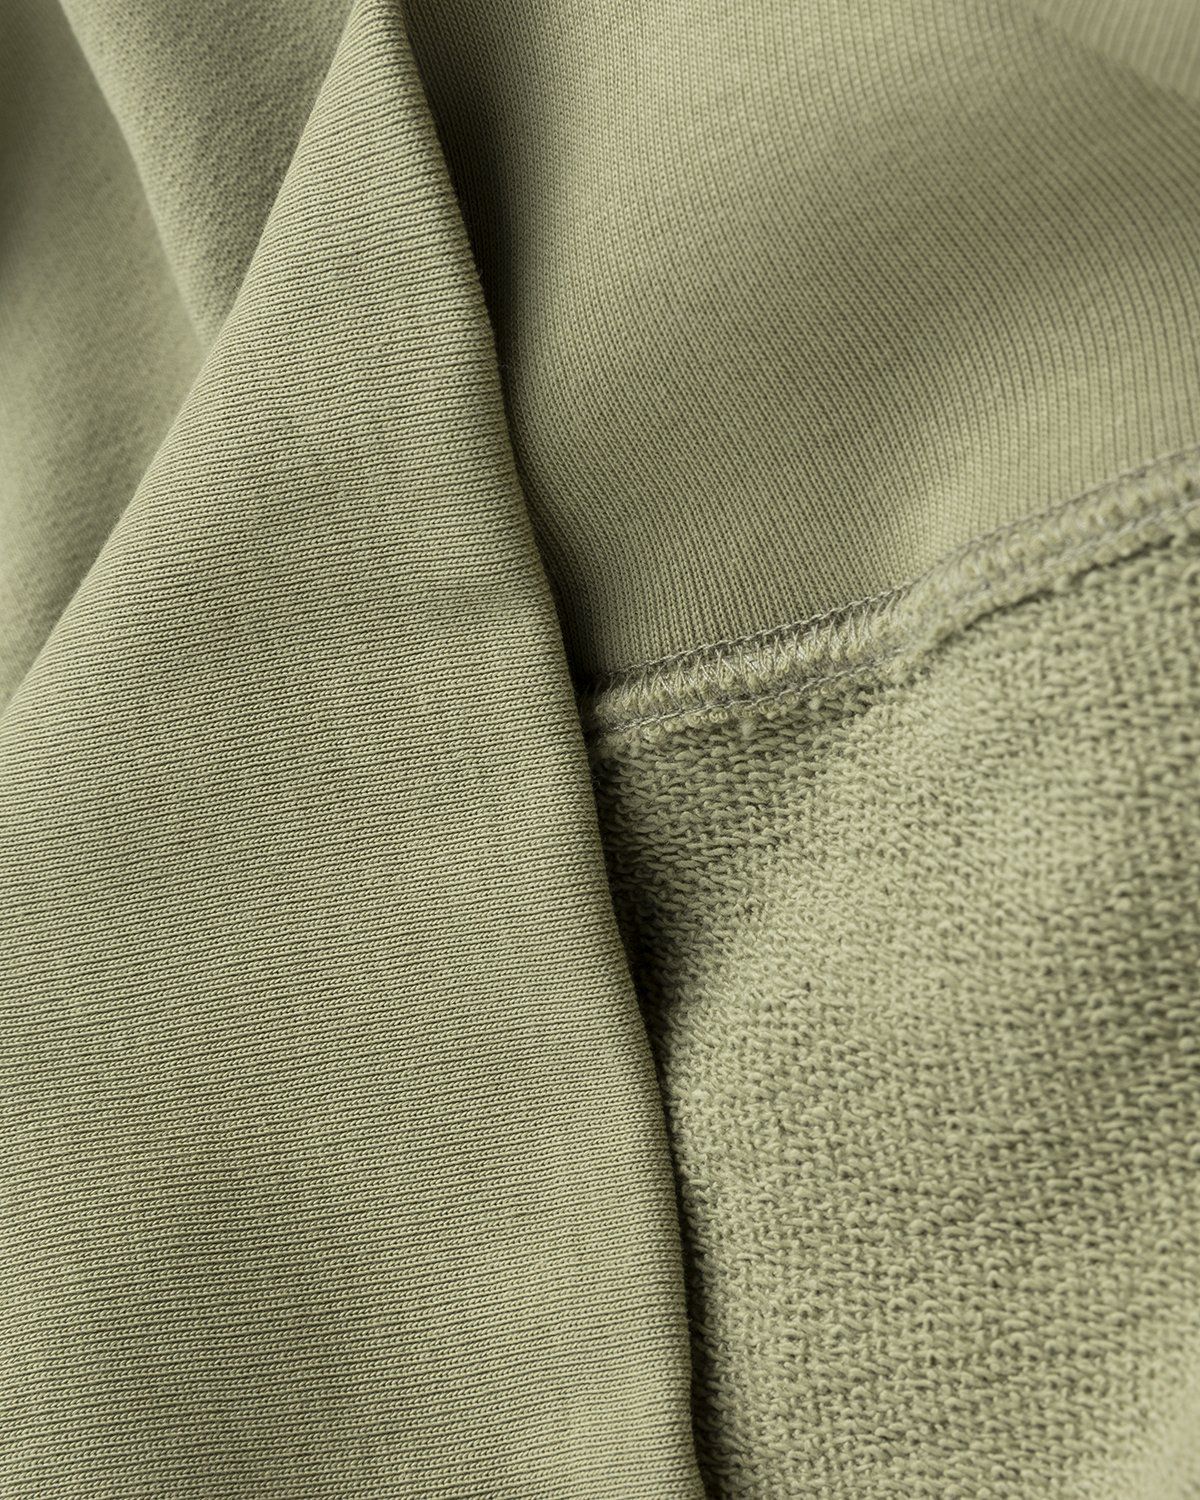 Acne Studios – Organic Cotton Hooded Sweatshirt Eucalyptus Green - Sweats - Green - Image 4